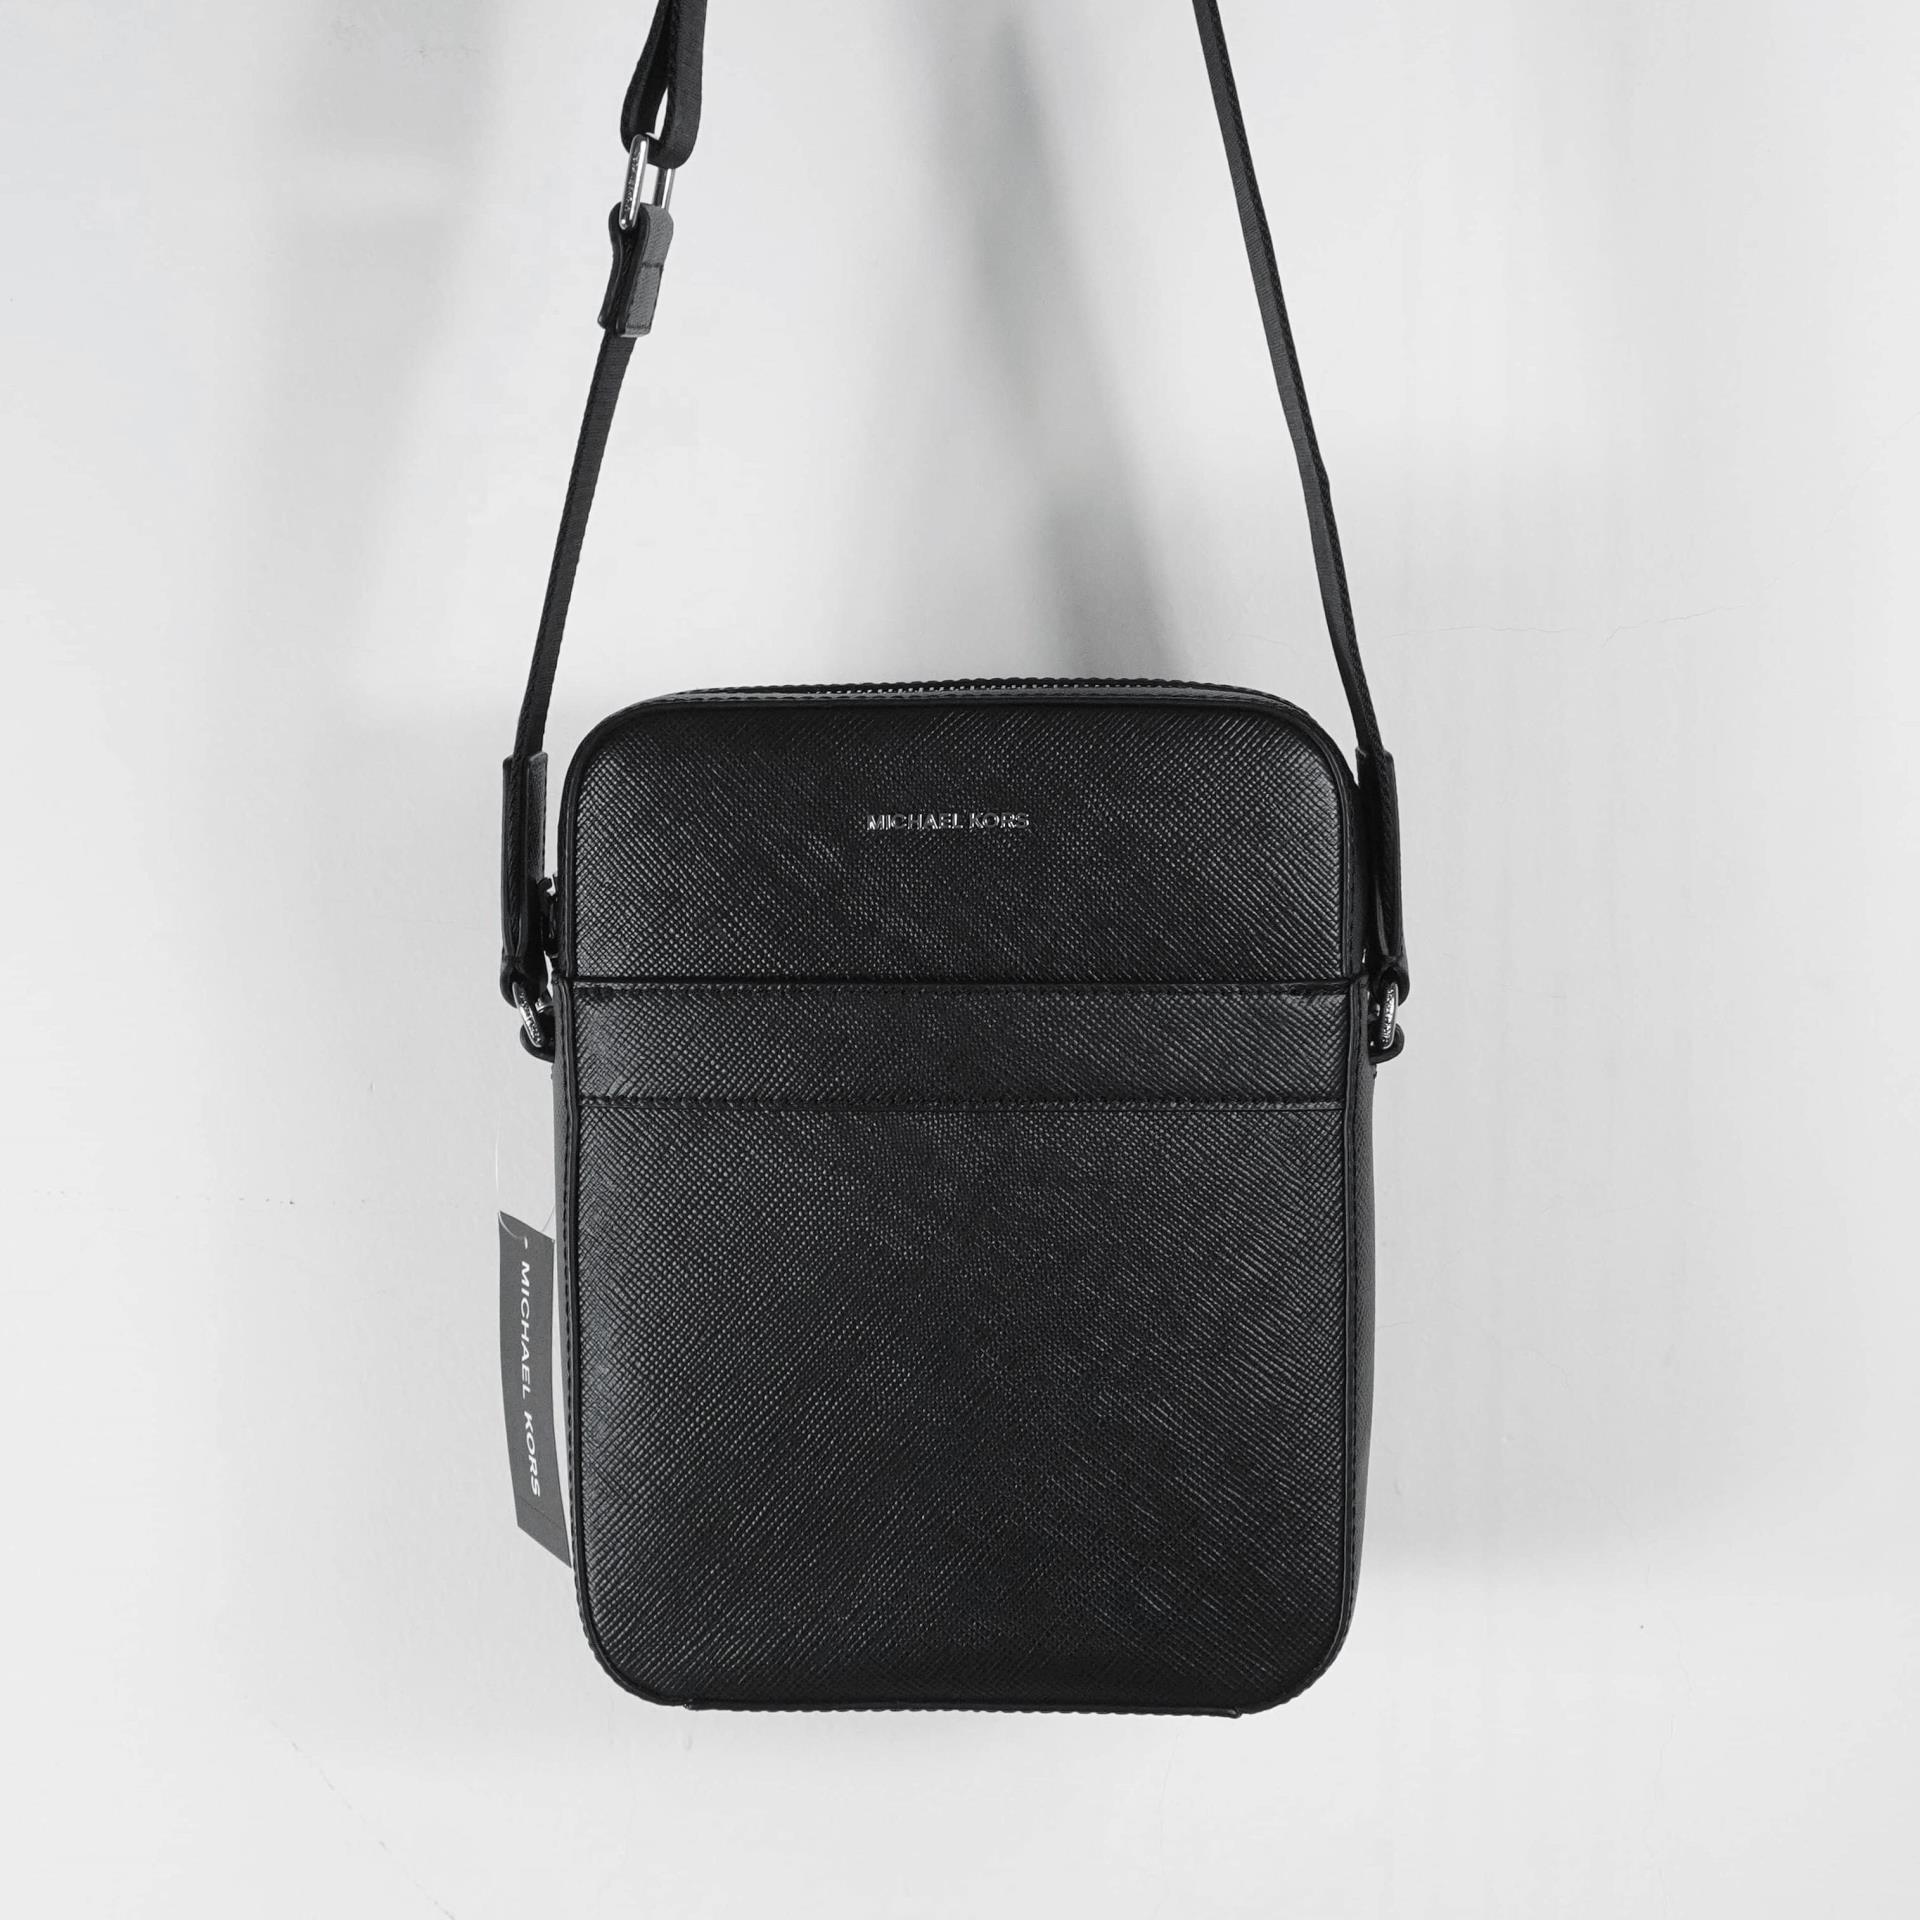 Michael Kors Black Leather Handbags  Purses for Women for sale  eBay